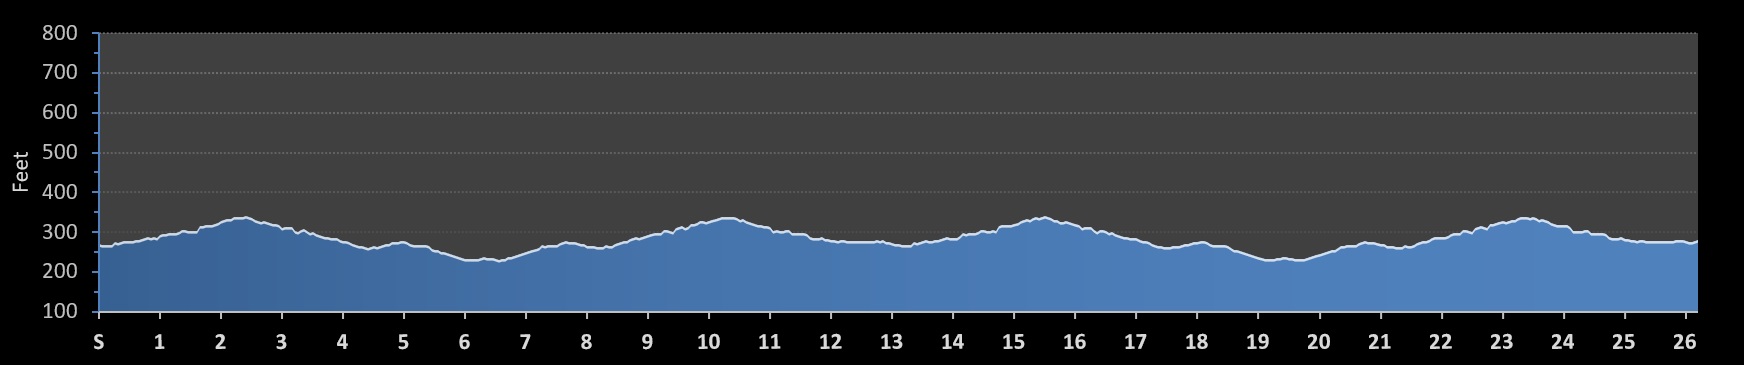 Cheap Marathon Elevation Profile